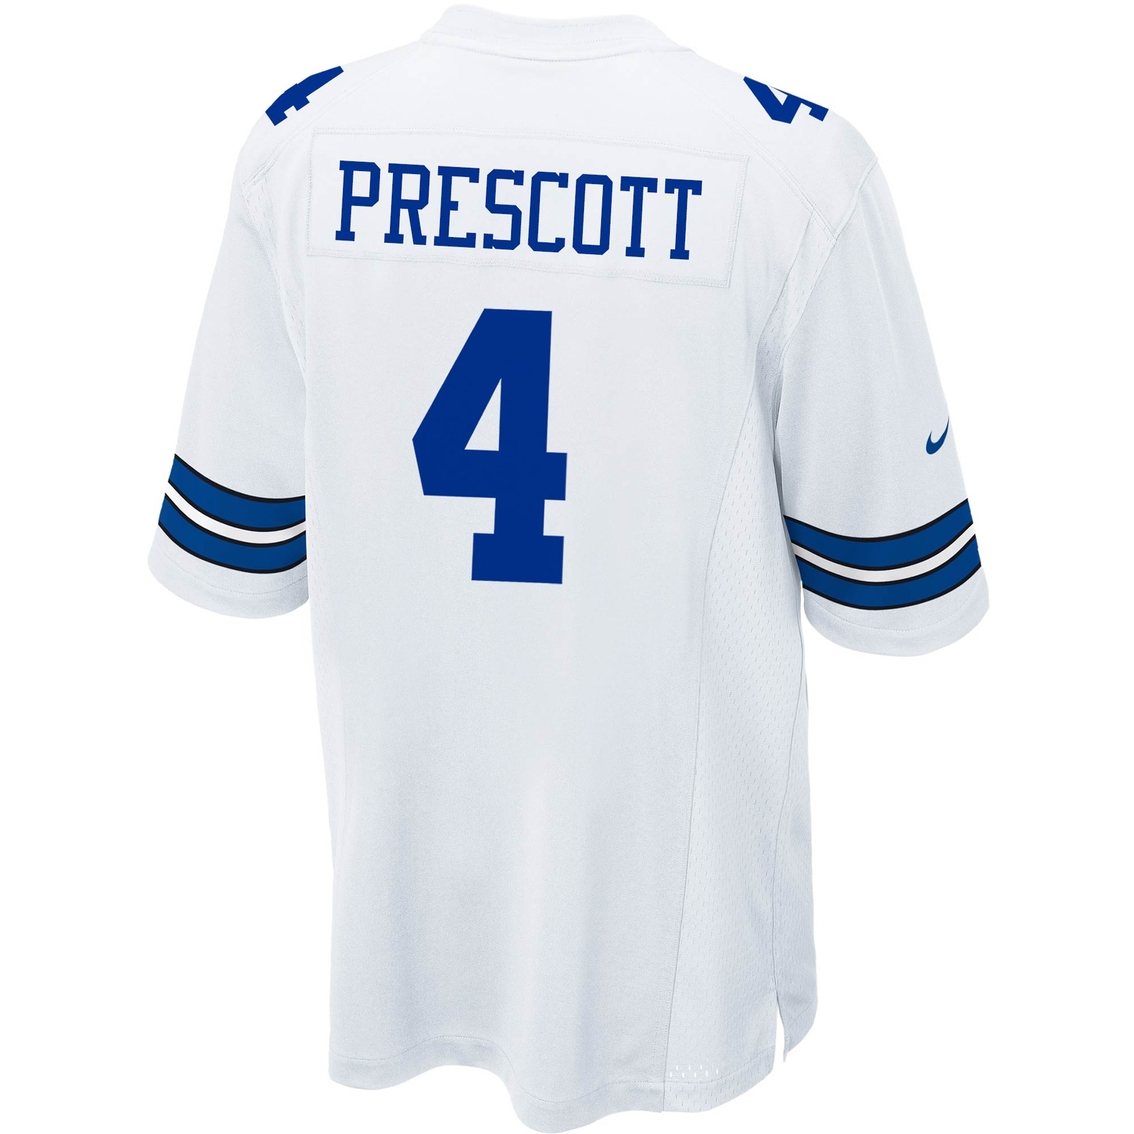 Nike NFL Dallas Cowboys Prescott Game Jersey, White - Image 2 of 2